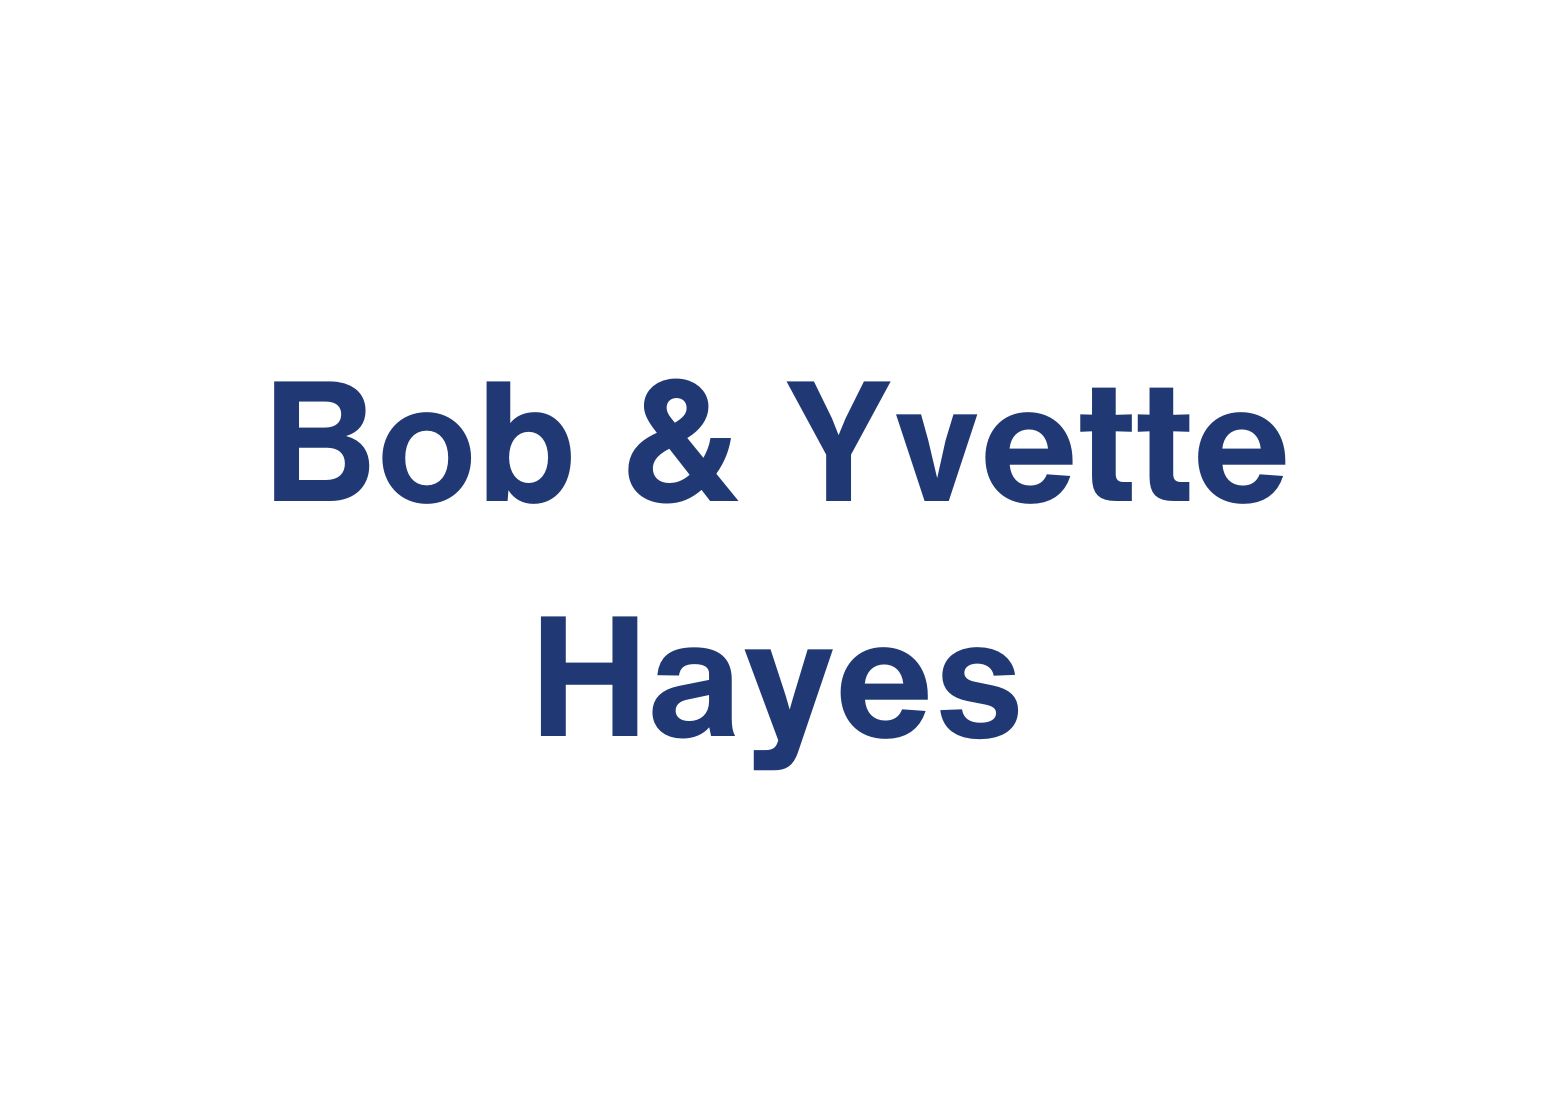 Bob & Yvette Hayes